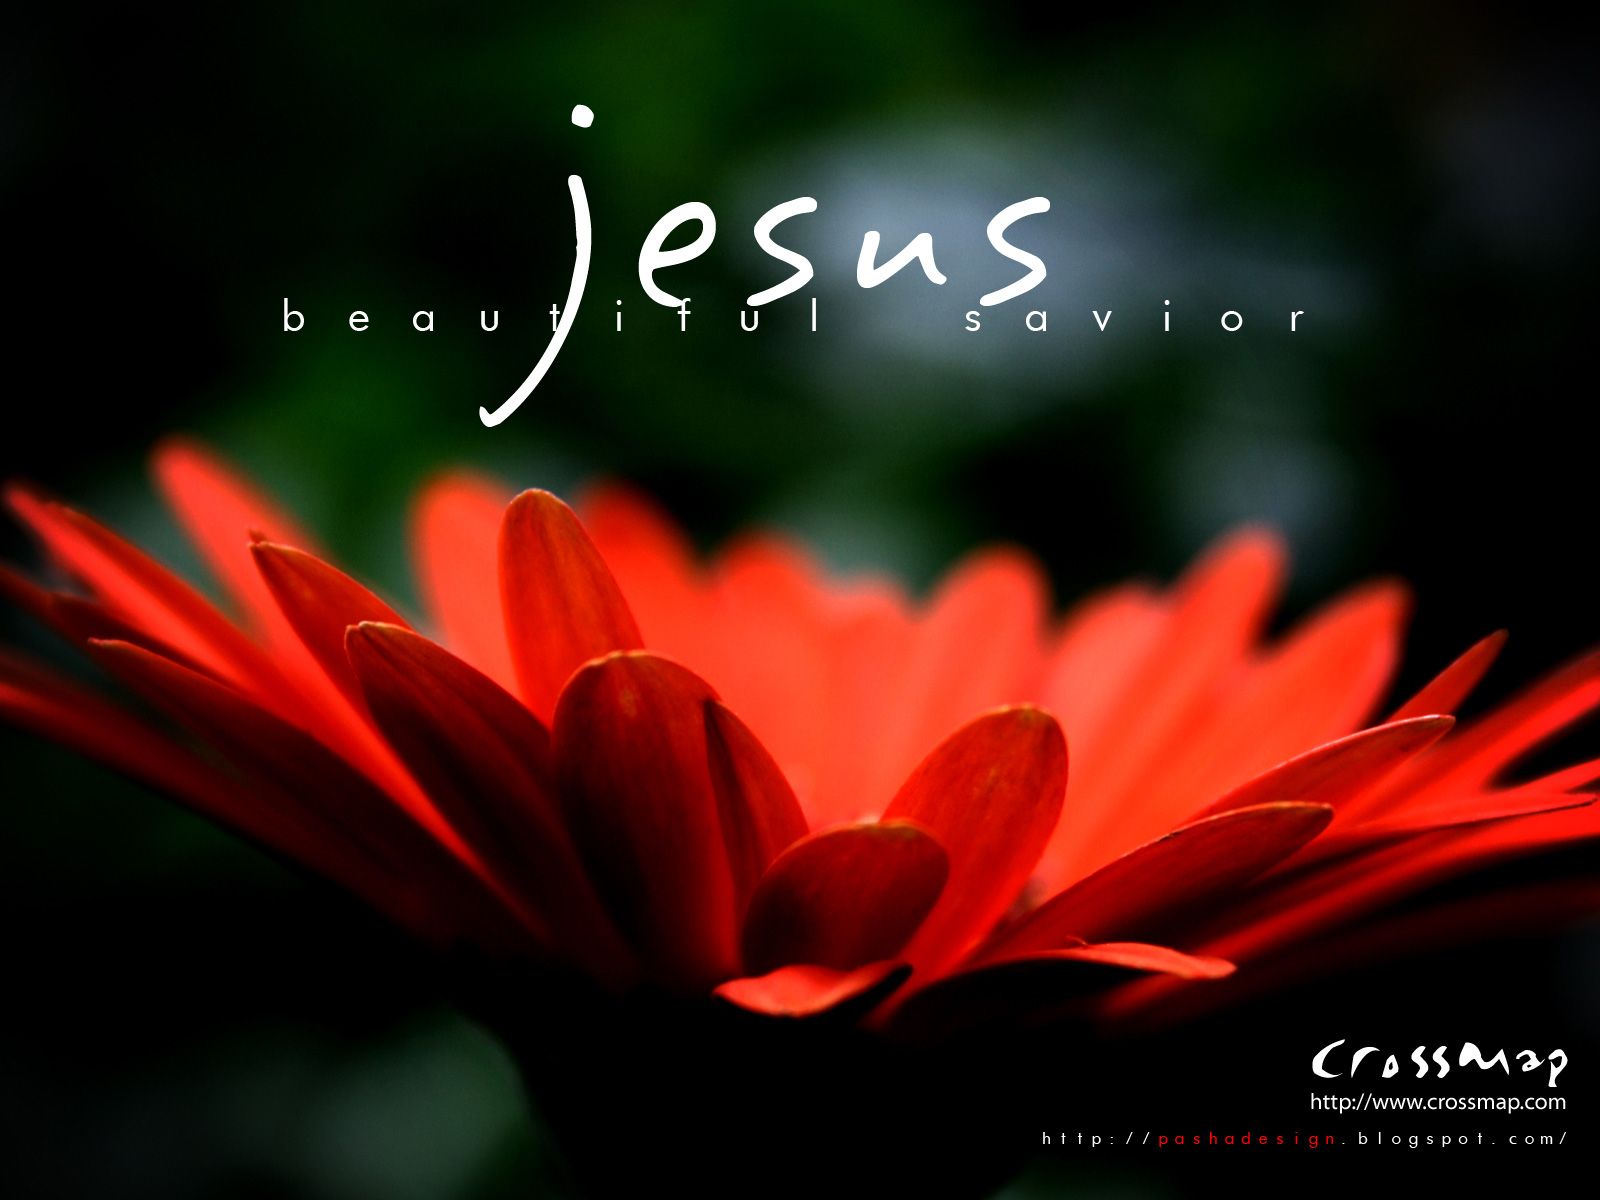 Jesus Beautiful Savior 1 Christian Photographs Crossmap